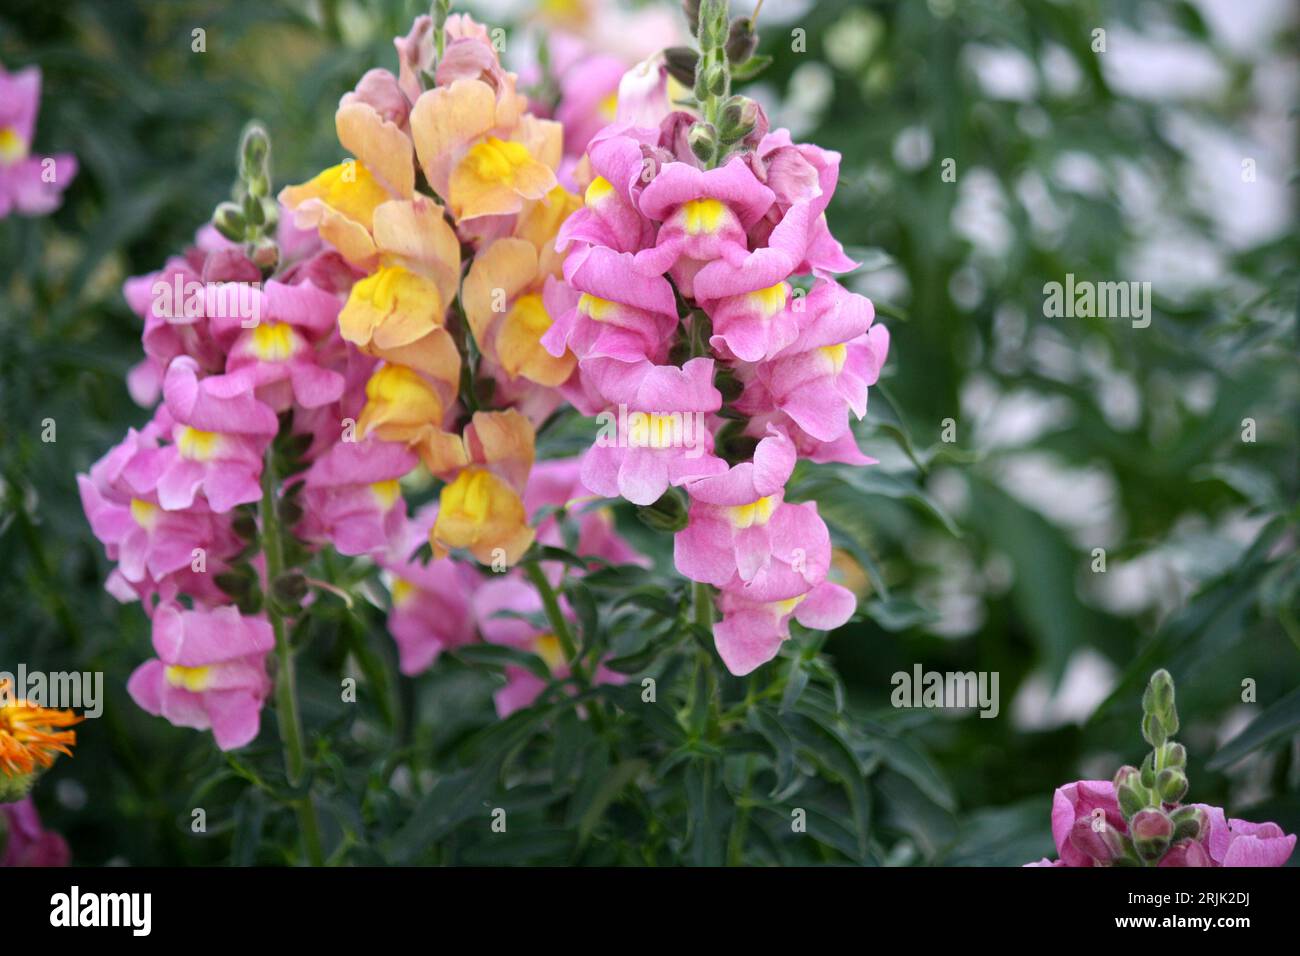 Cluster of pink and yellow Snapdragon (Antirrhinum majus) flowers : (pix Sanjiv Shukla) Stock Photo